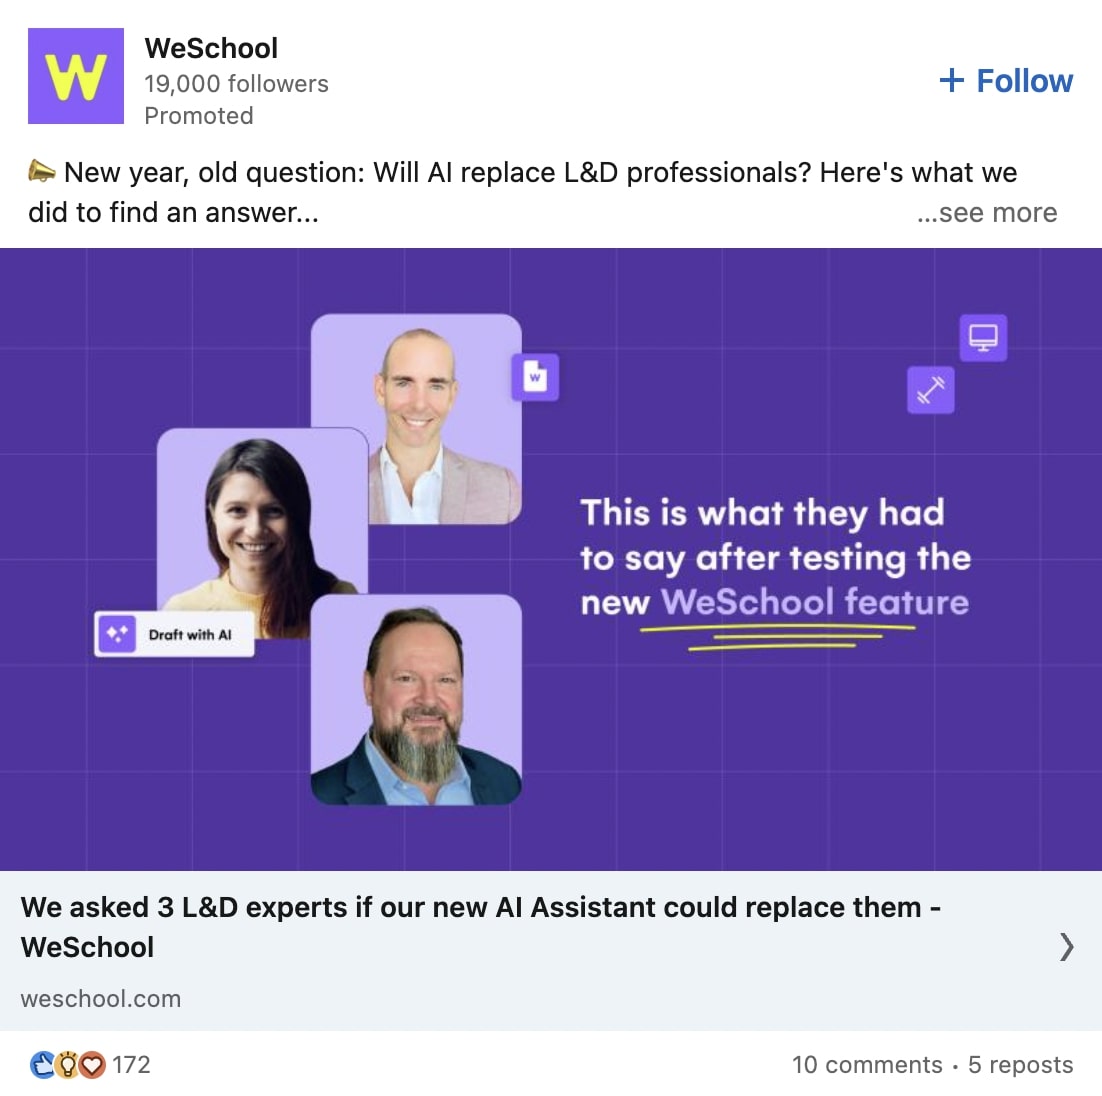 WeSchool LinkedIn Ad showing how L&D experts perceive AI Assistants